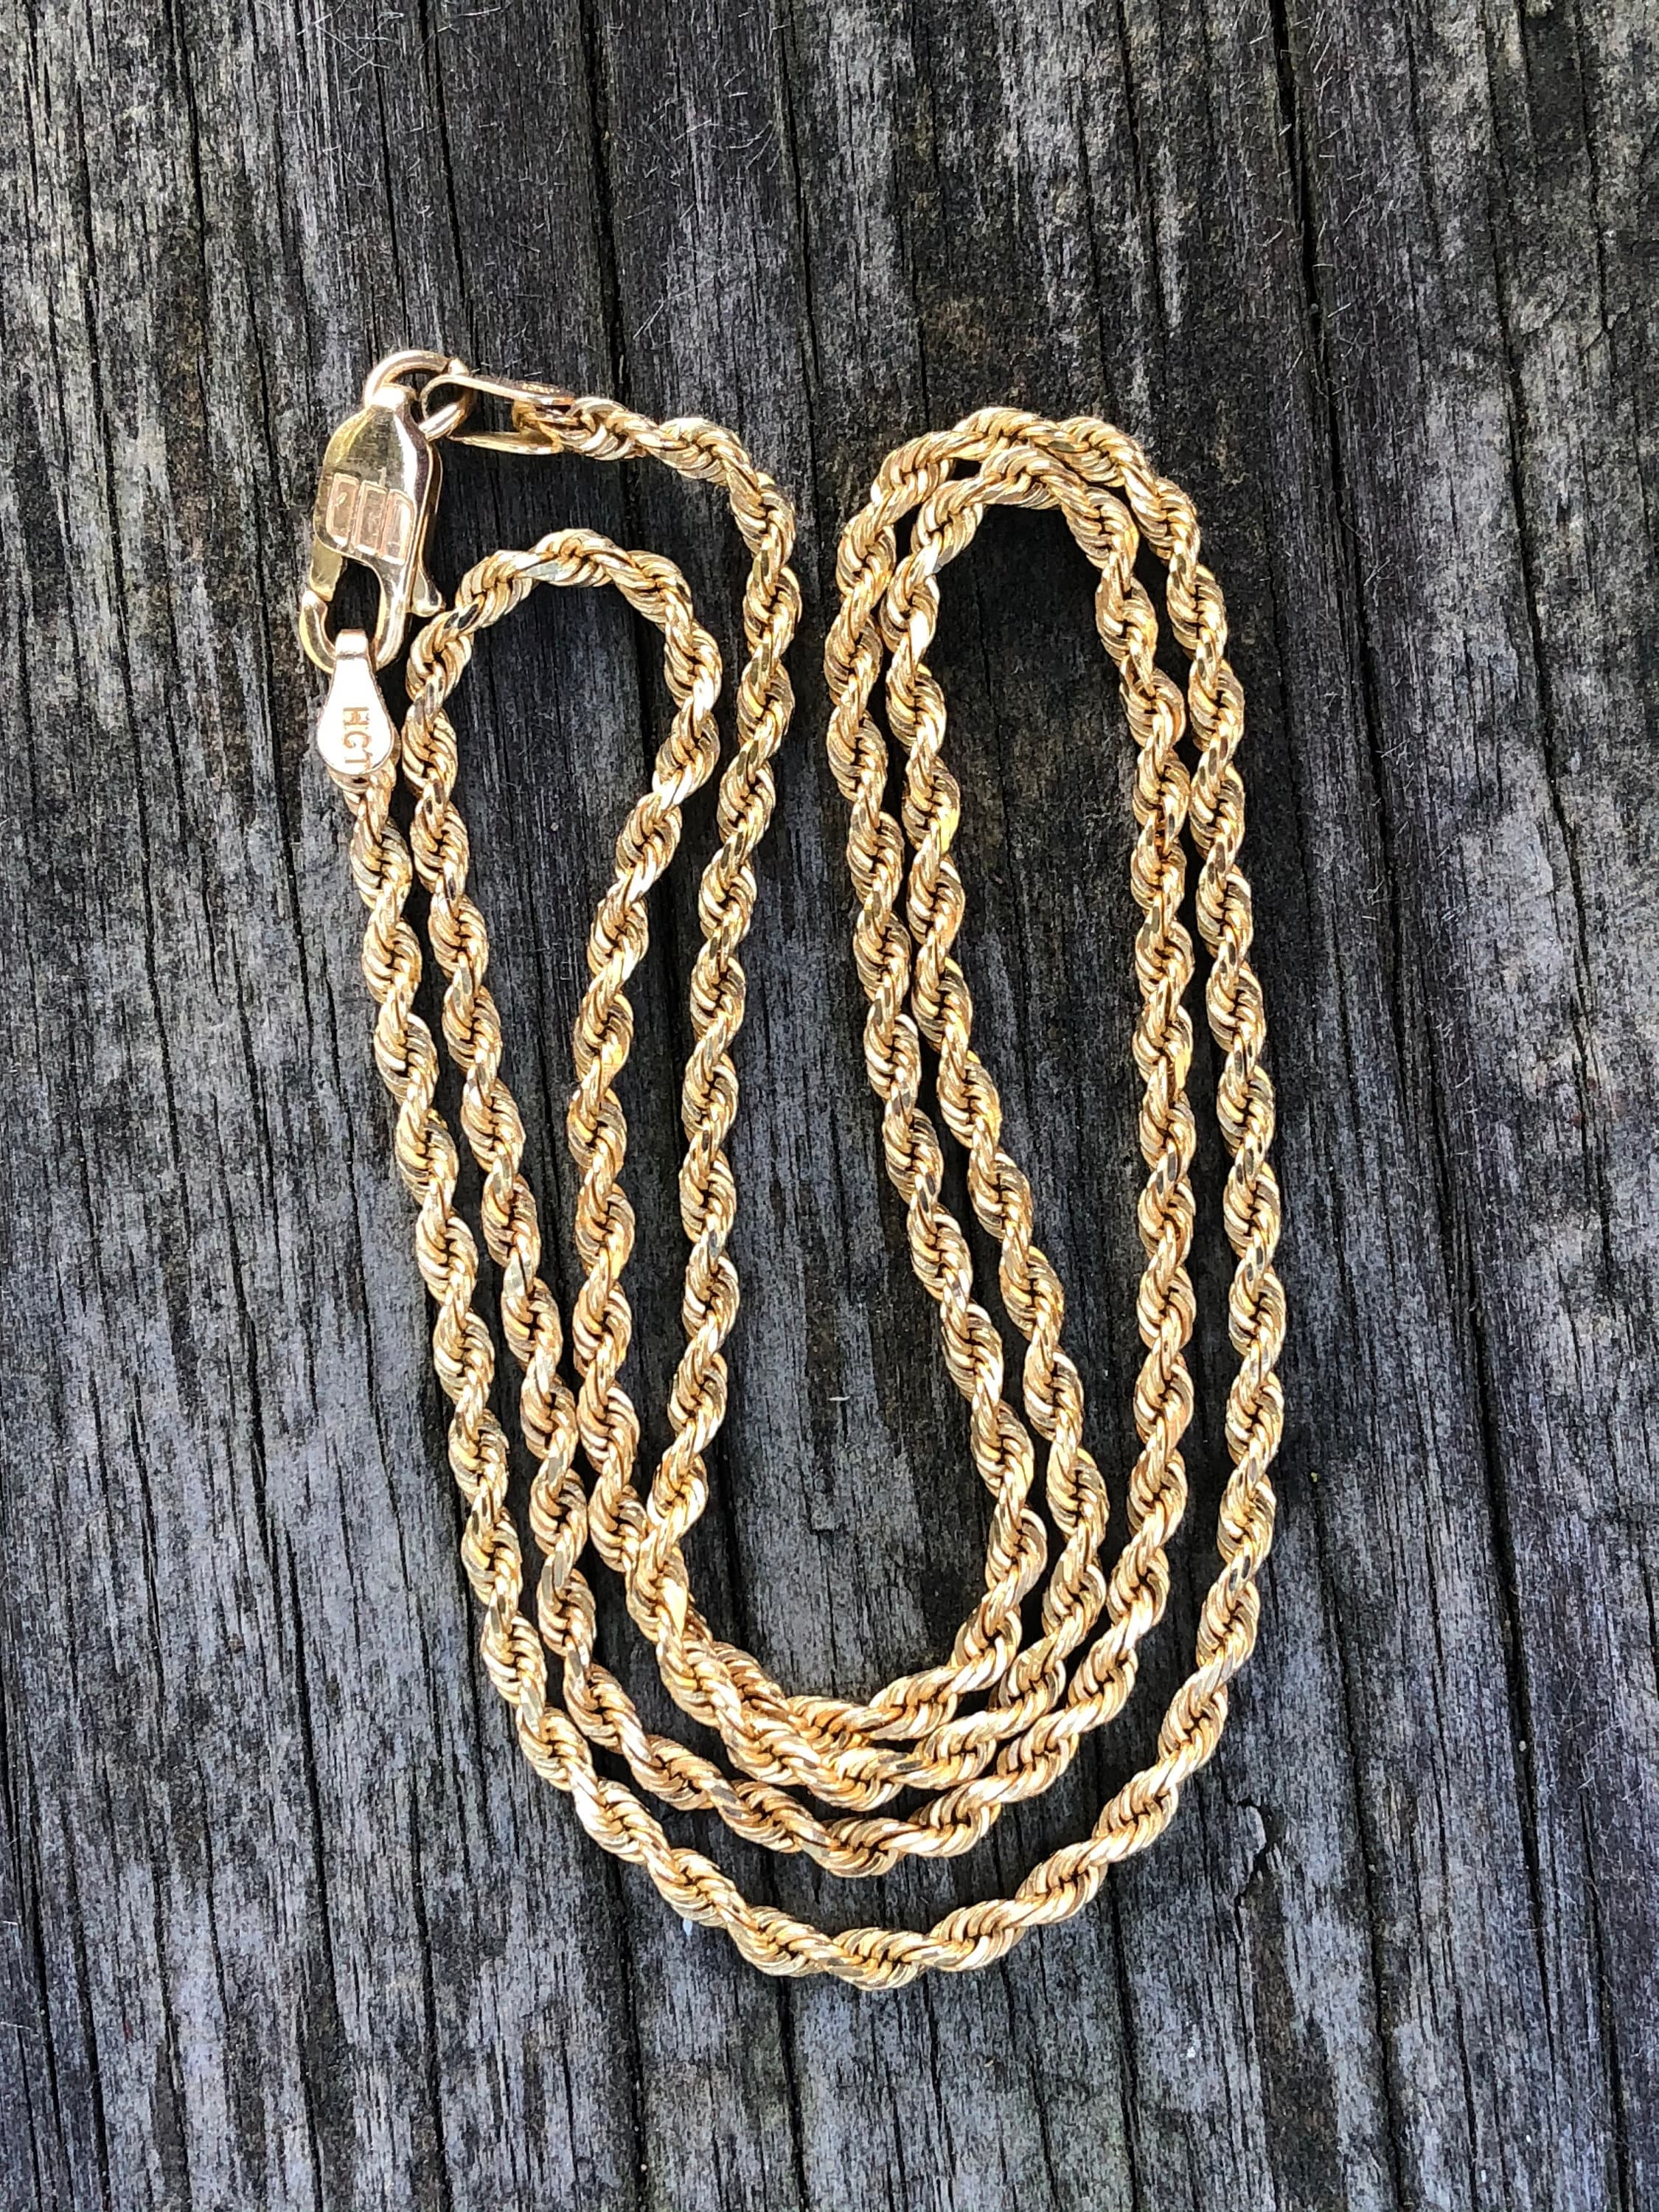 Vintage heavy 14k gold rope chain 20 | Etsy